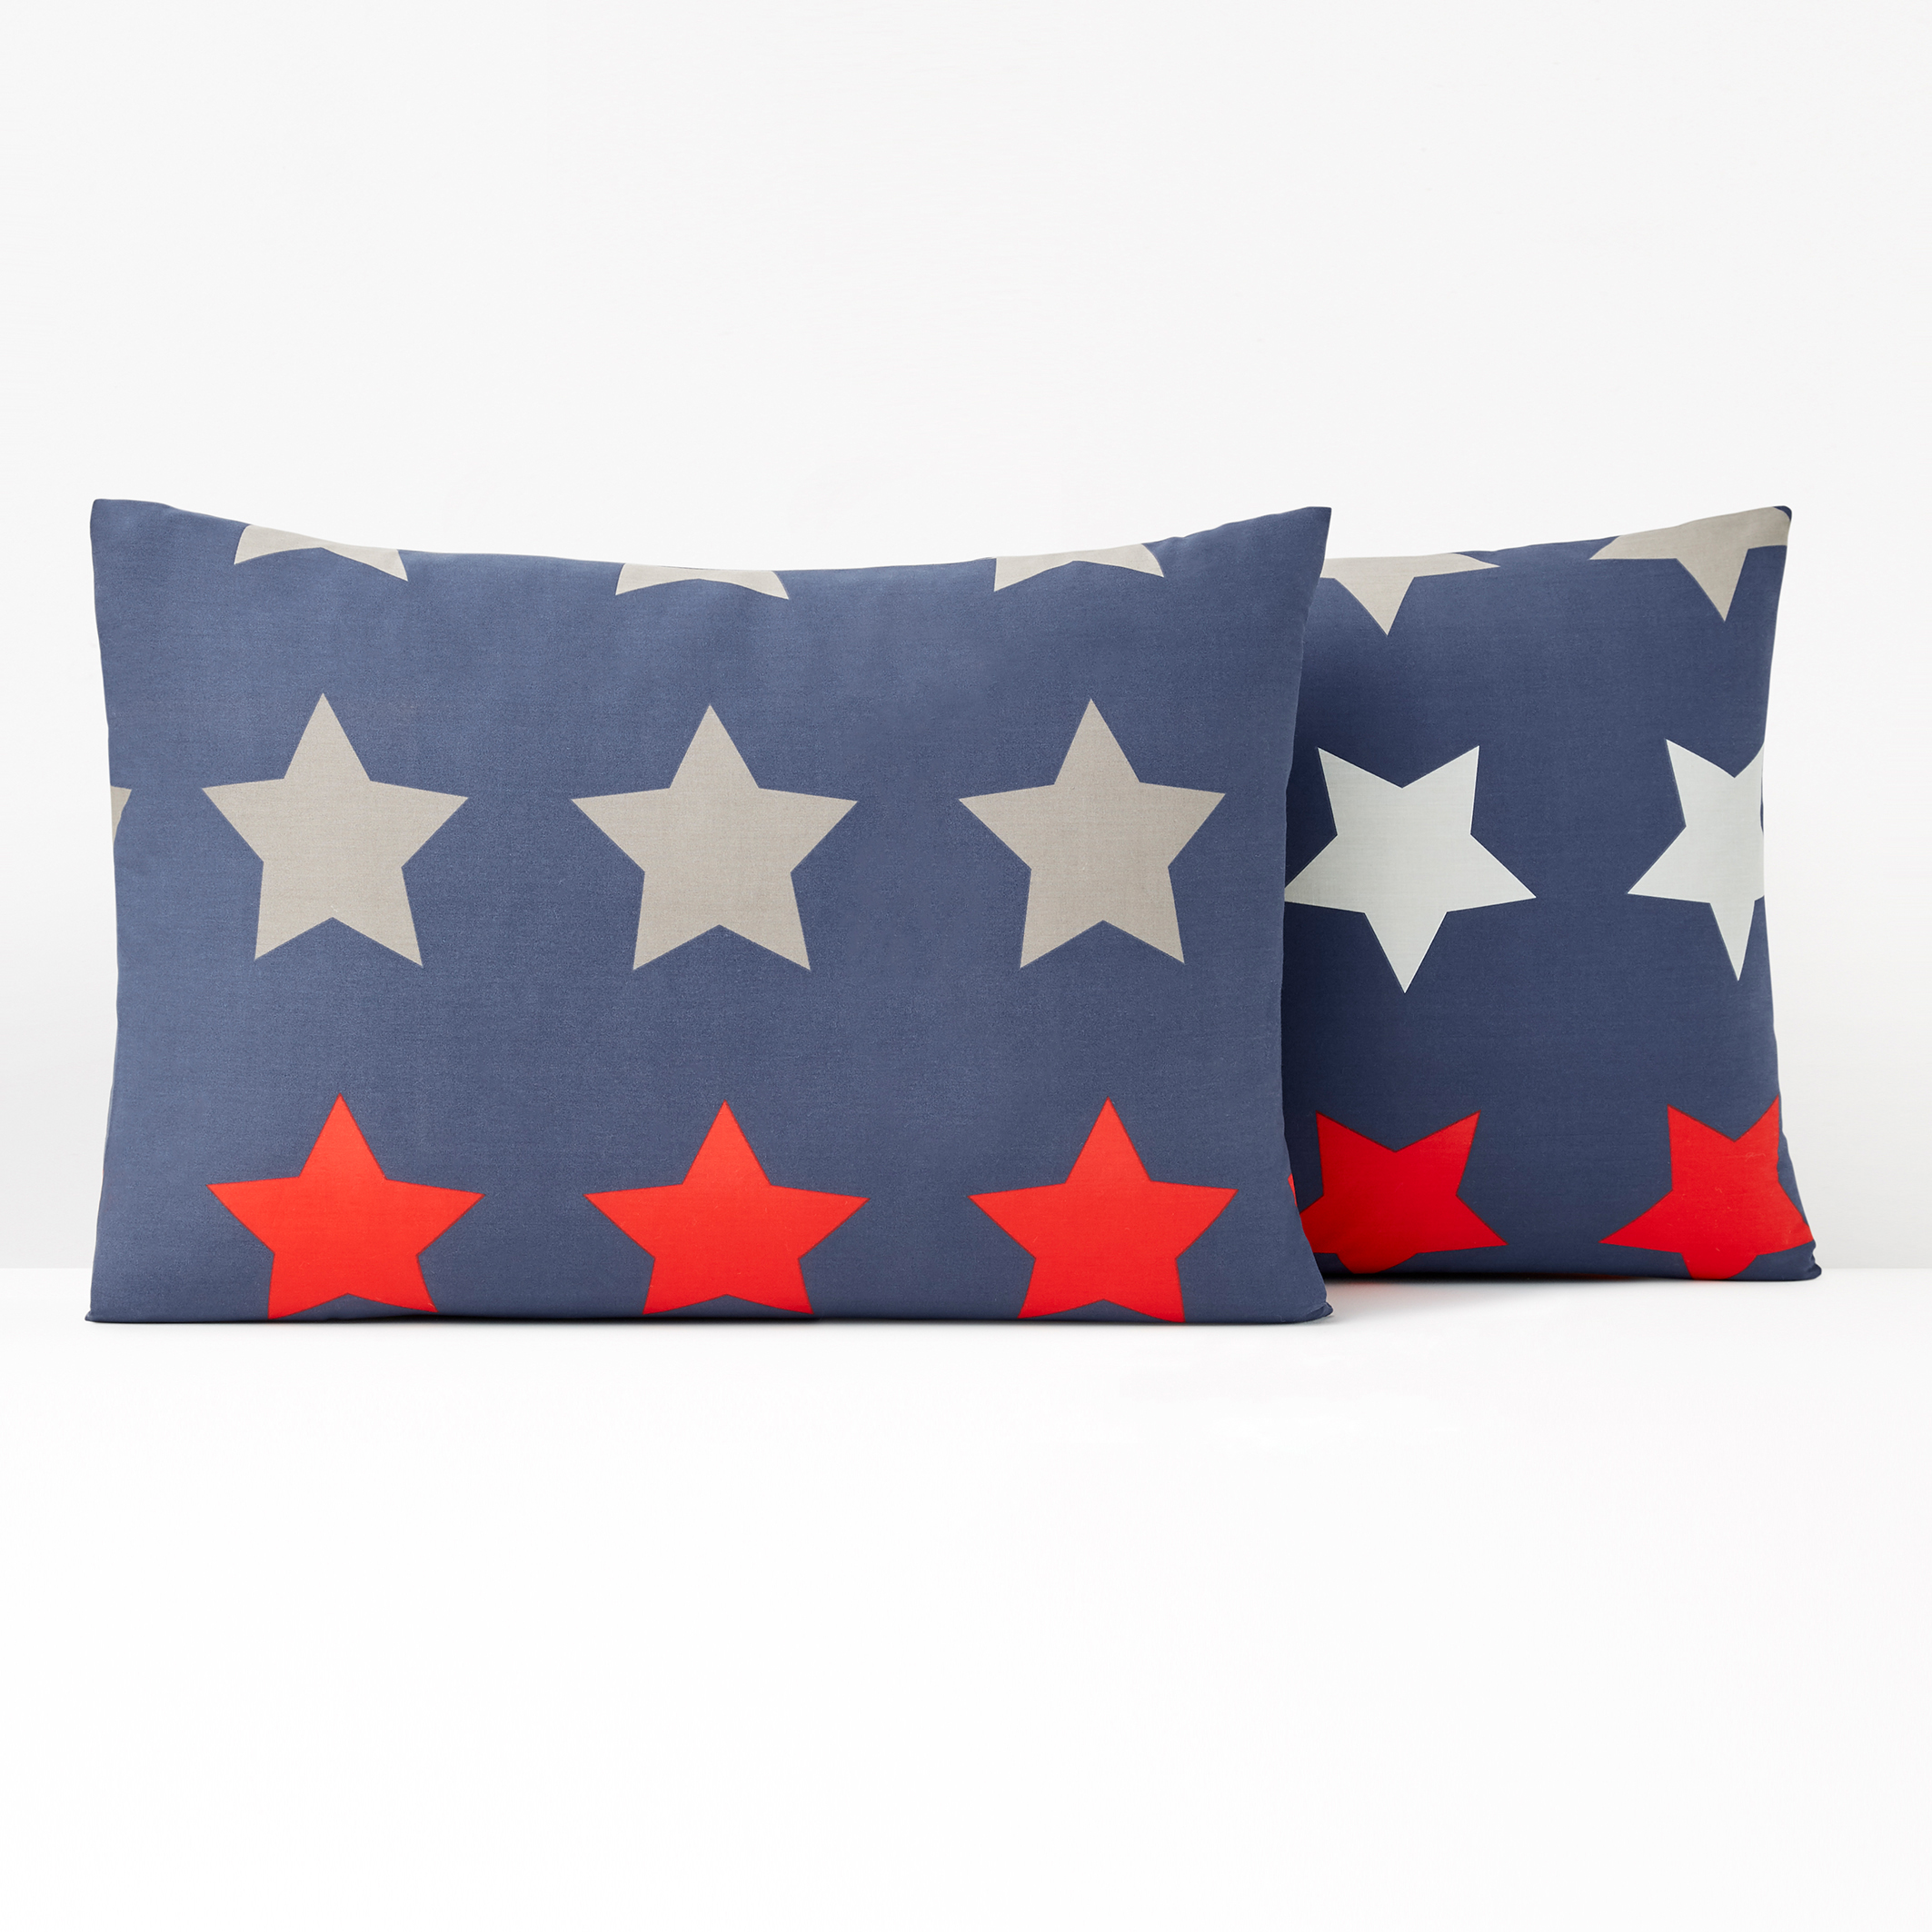 Bradford Star Fabric Star Pillow Cover 